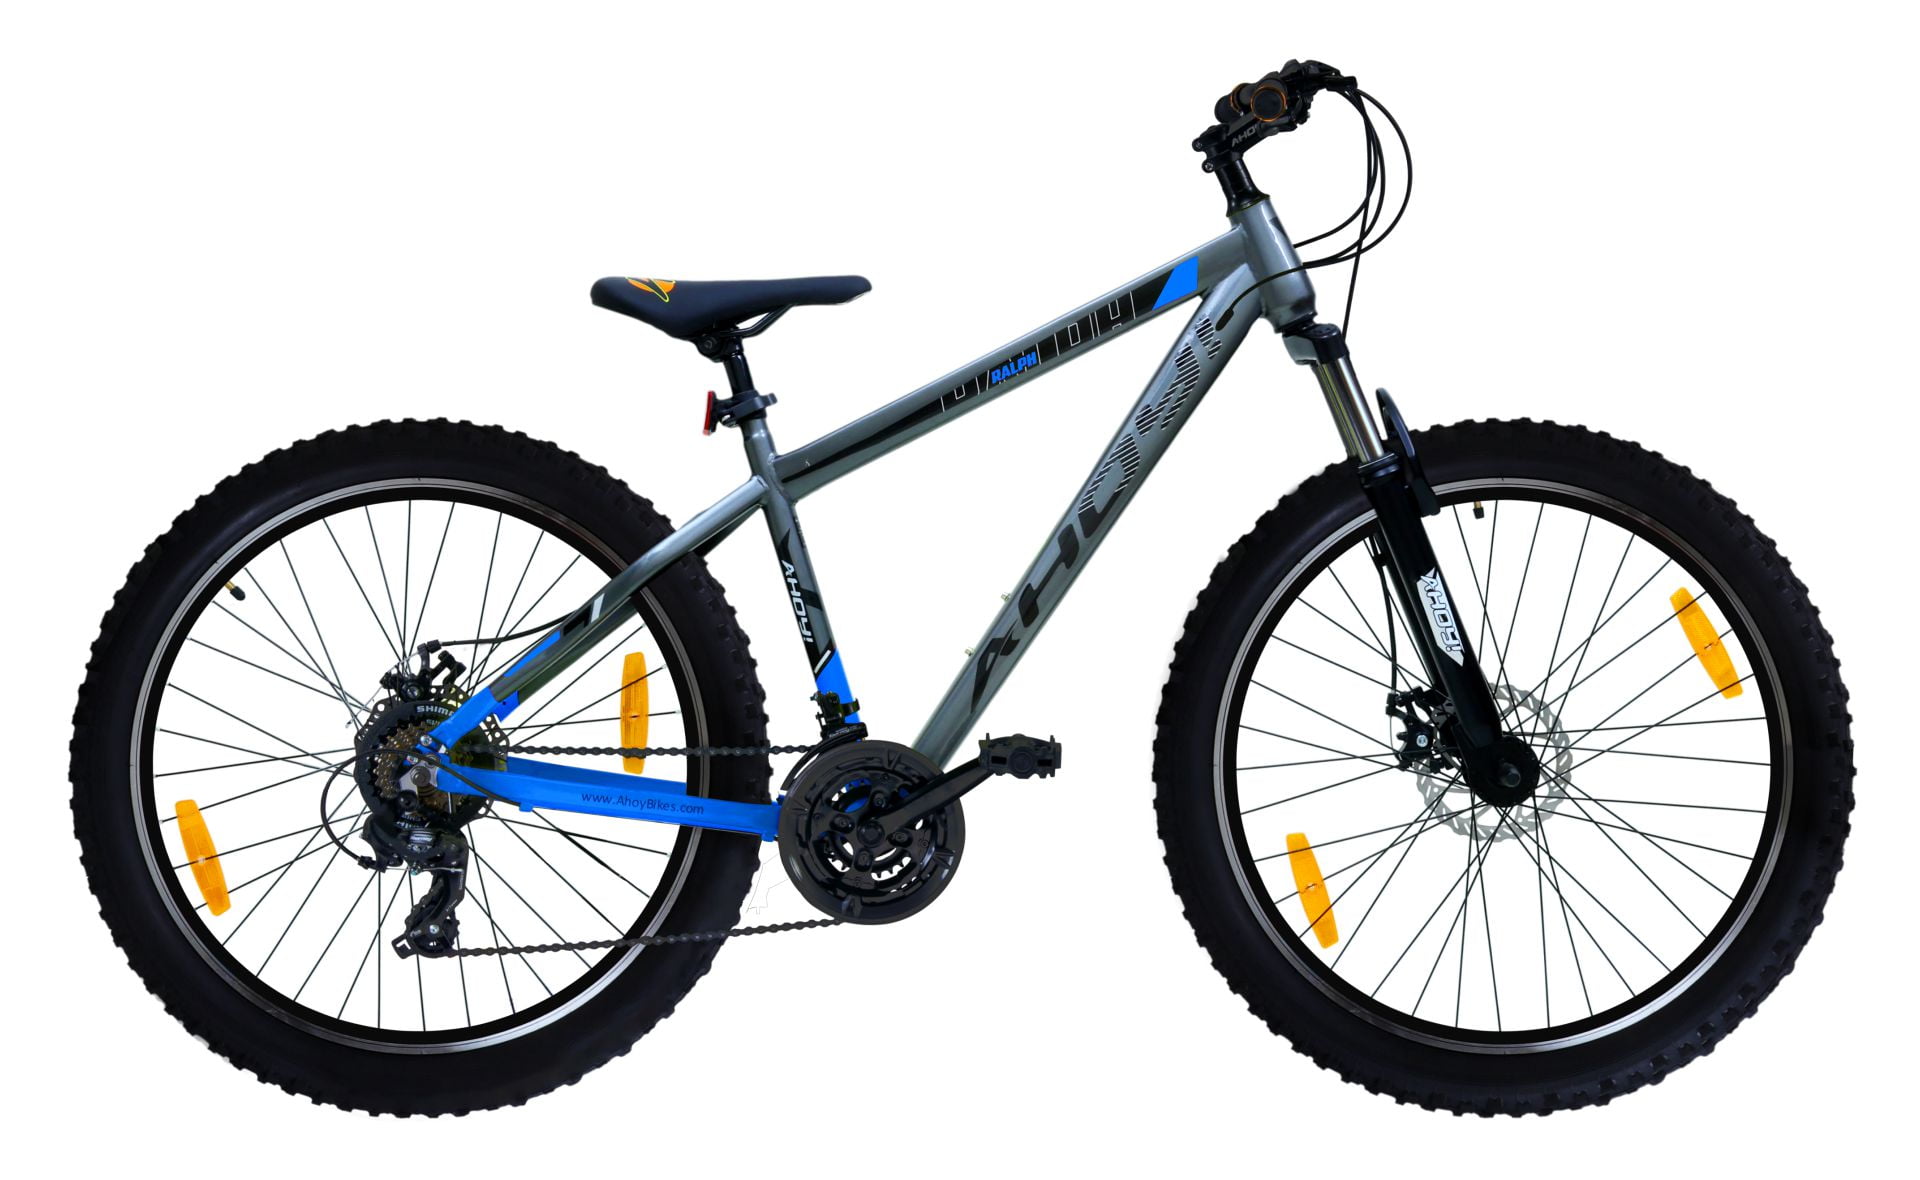 Ralph MTB Cycle 29T | Blue Mountain Bike with Shimano gear